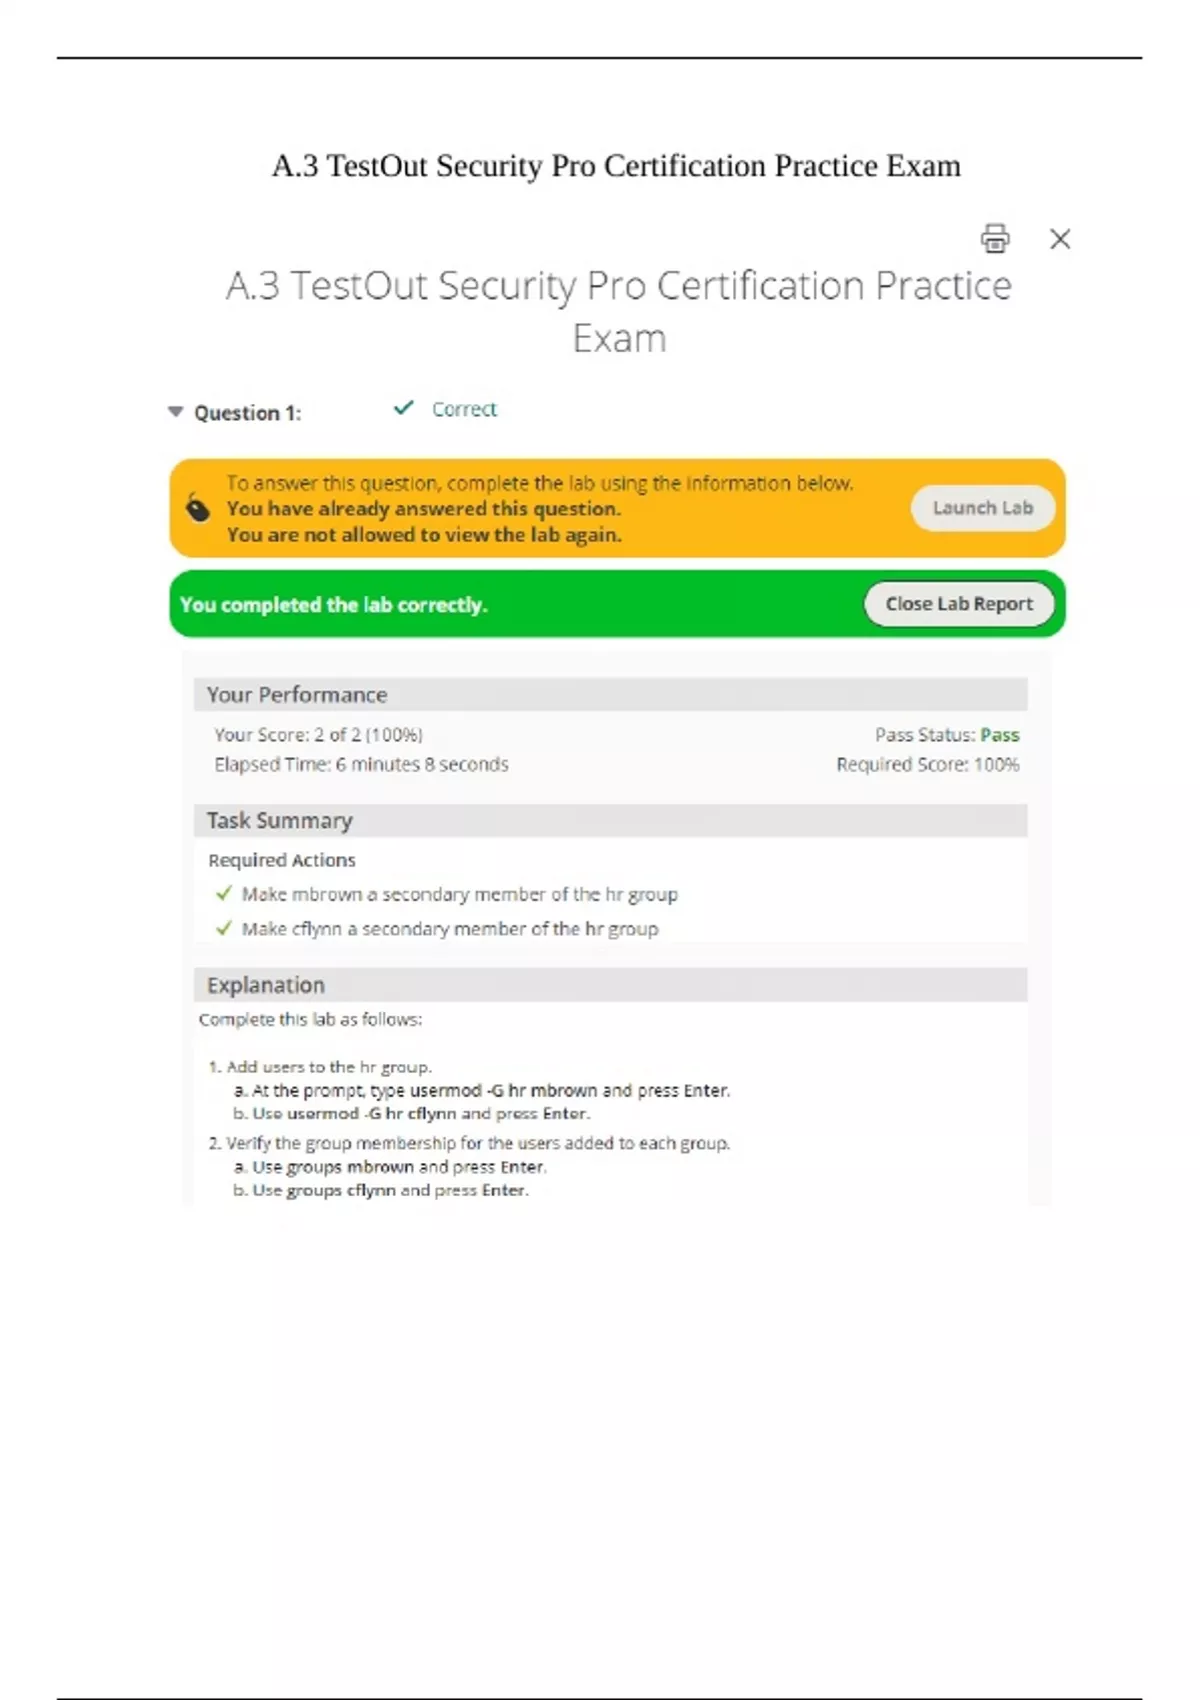 a.3 testout security pro certification practice exam